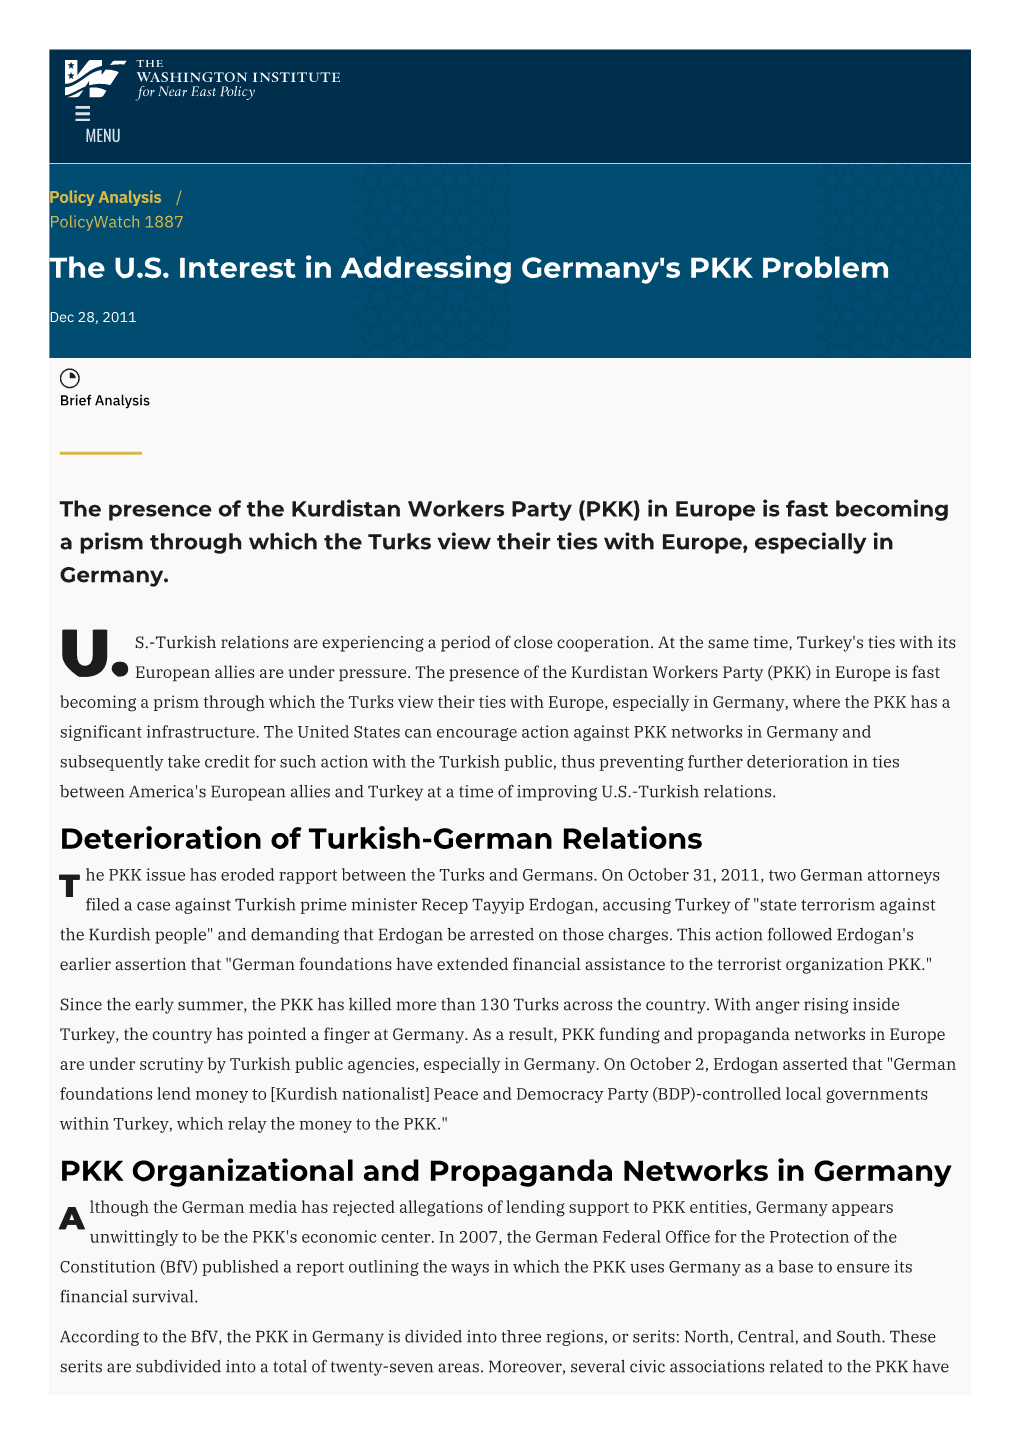 The U.S. Interest in Addressing Germany's PKK Problem | The